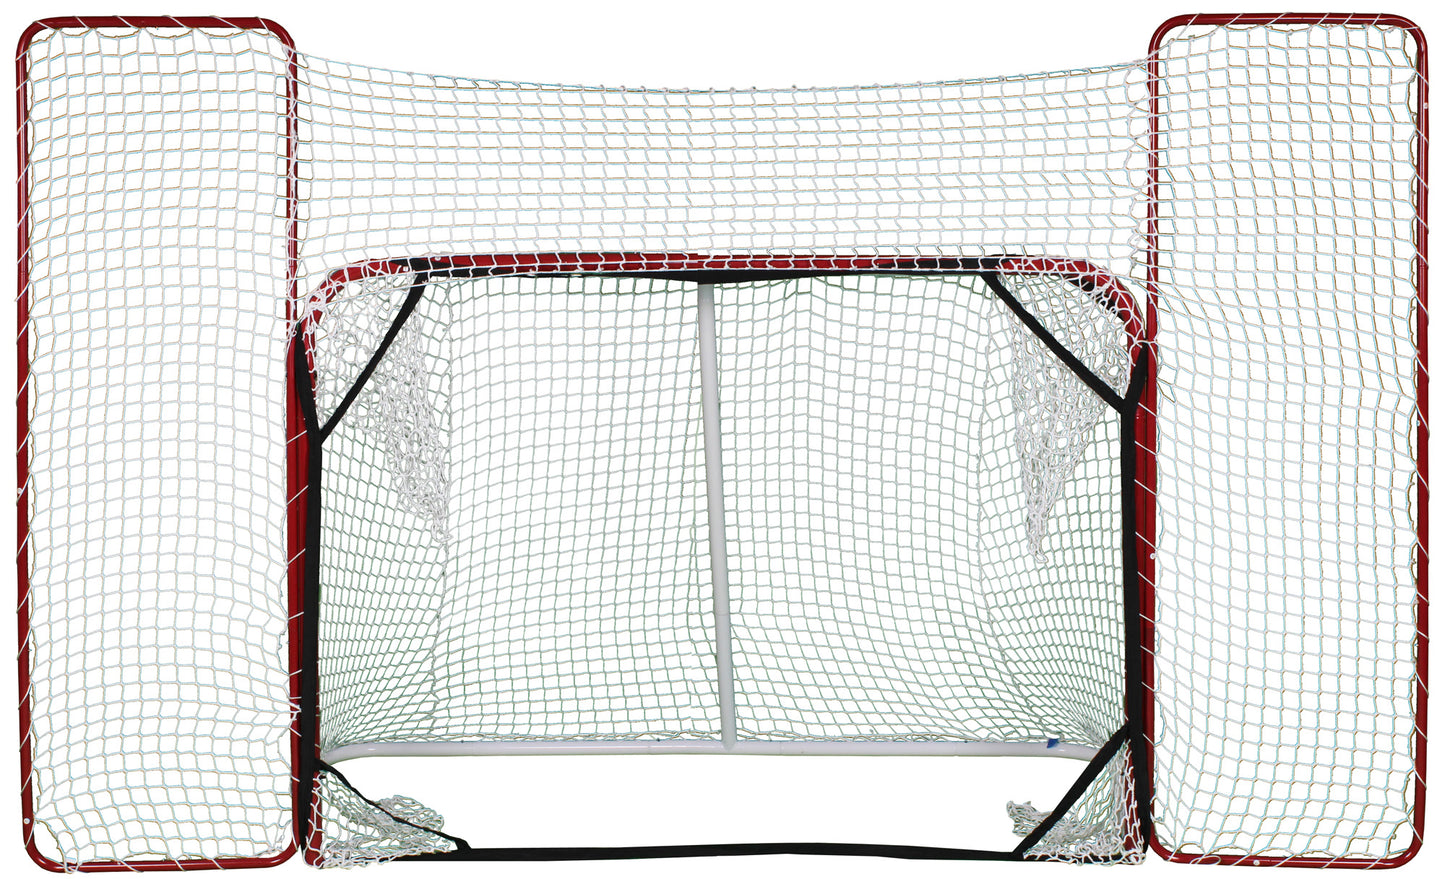 Hockey goal 188x129cm with safety net 302x175cm, besthockey hockey goal target